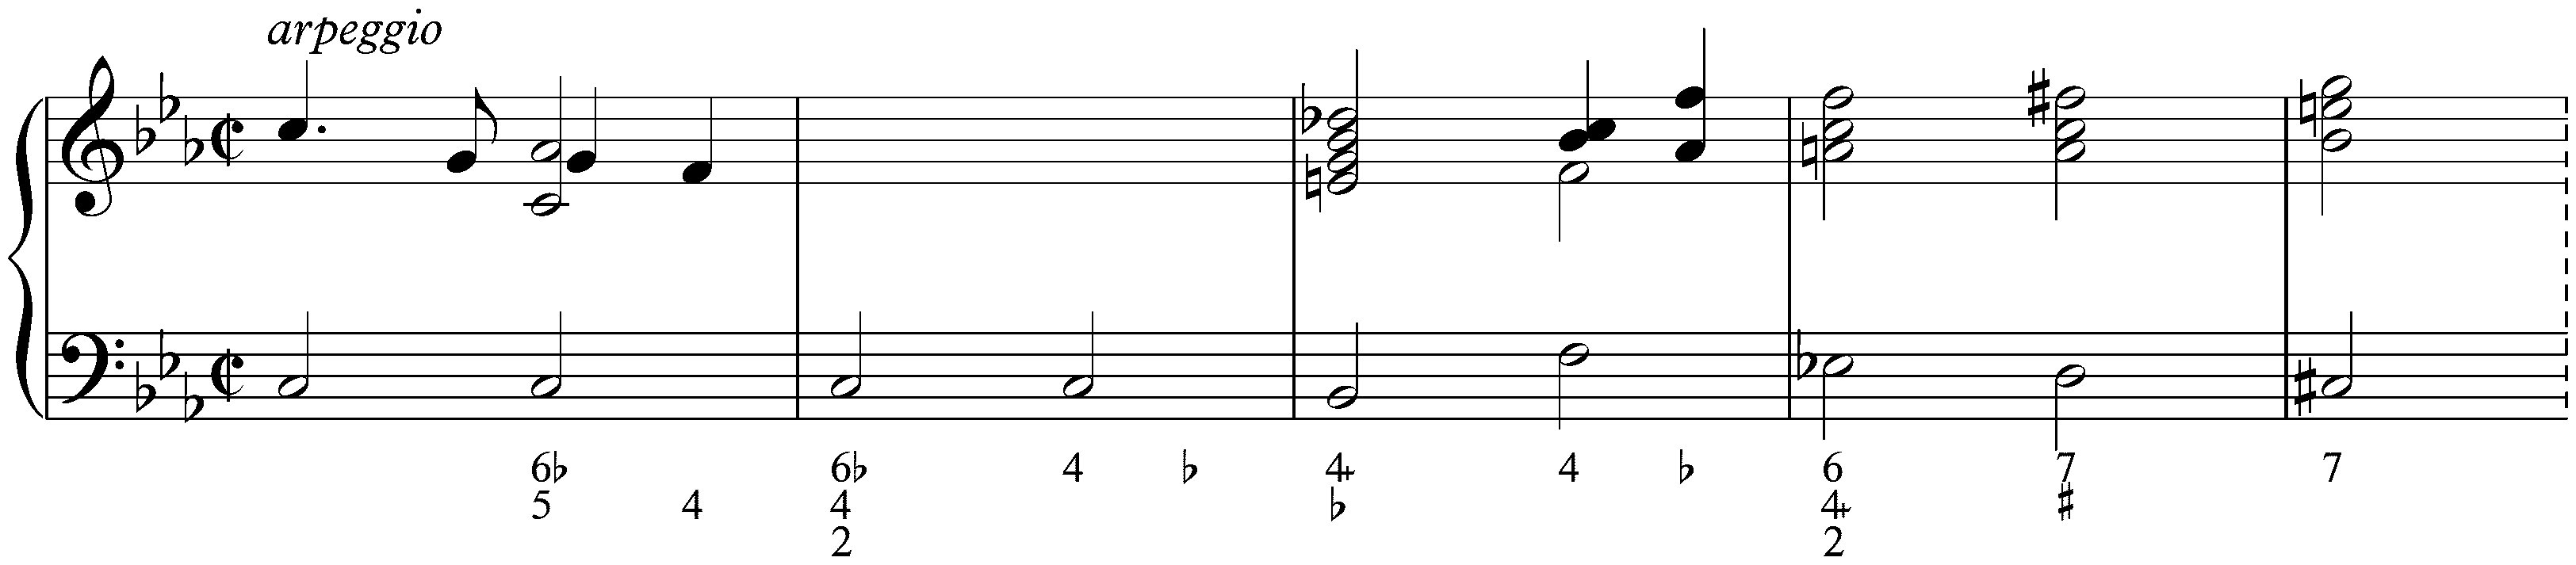 Partita in C minor, HWV 444; 1. Prélude